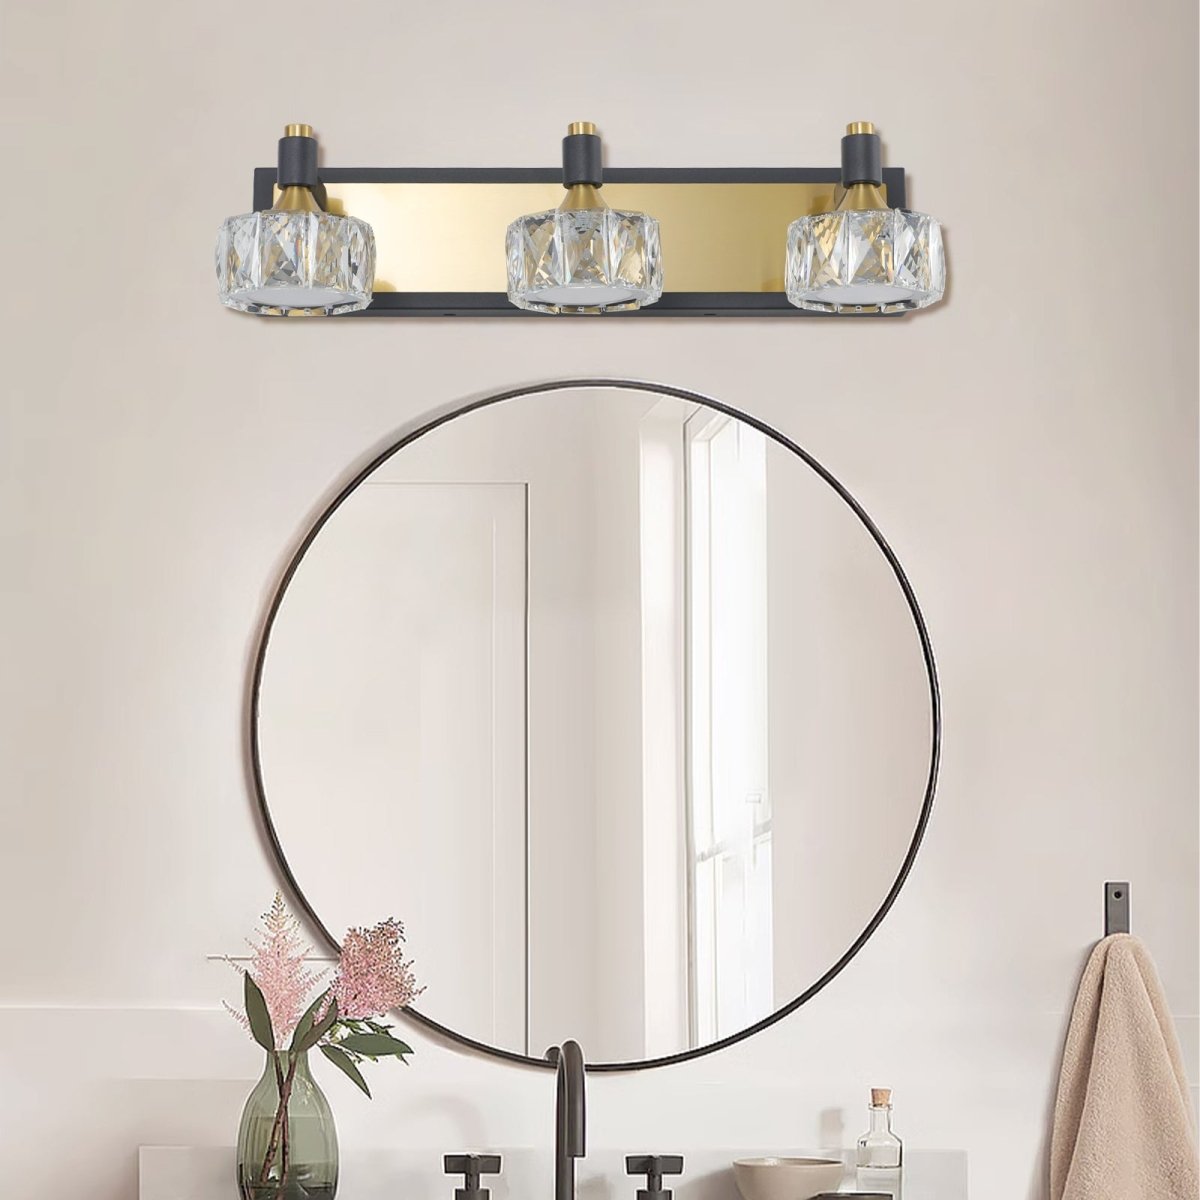 ExBrite 3-Light Bathroom Light,Crystal Bathroom Vanity Light,Bath Wall Lighting Fixtures,For Mirror Living Room Hallway Cabinet Porch